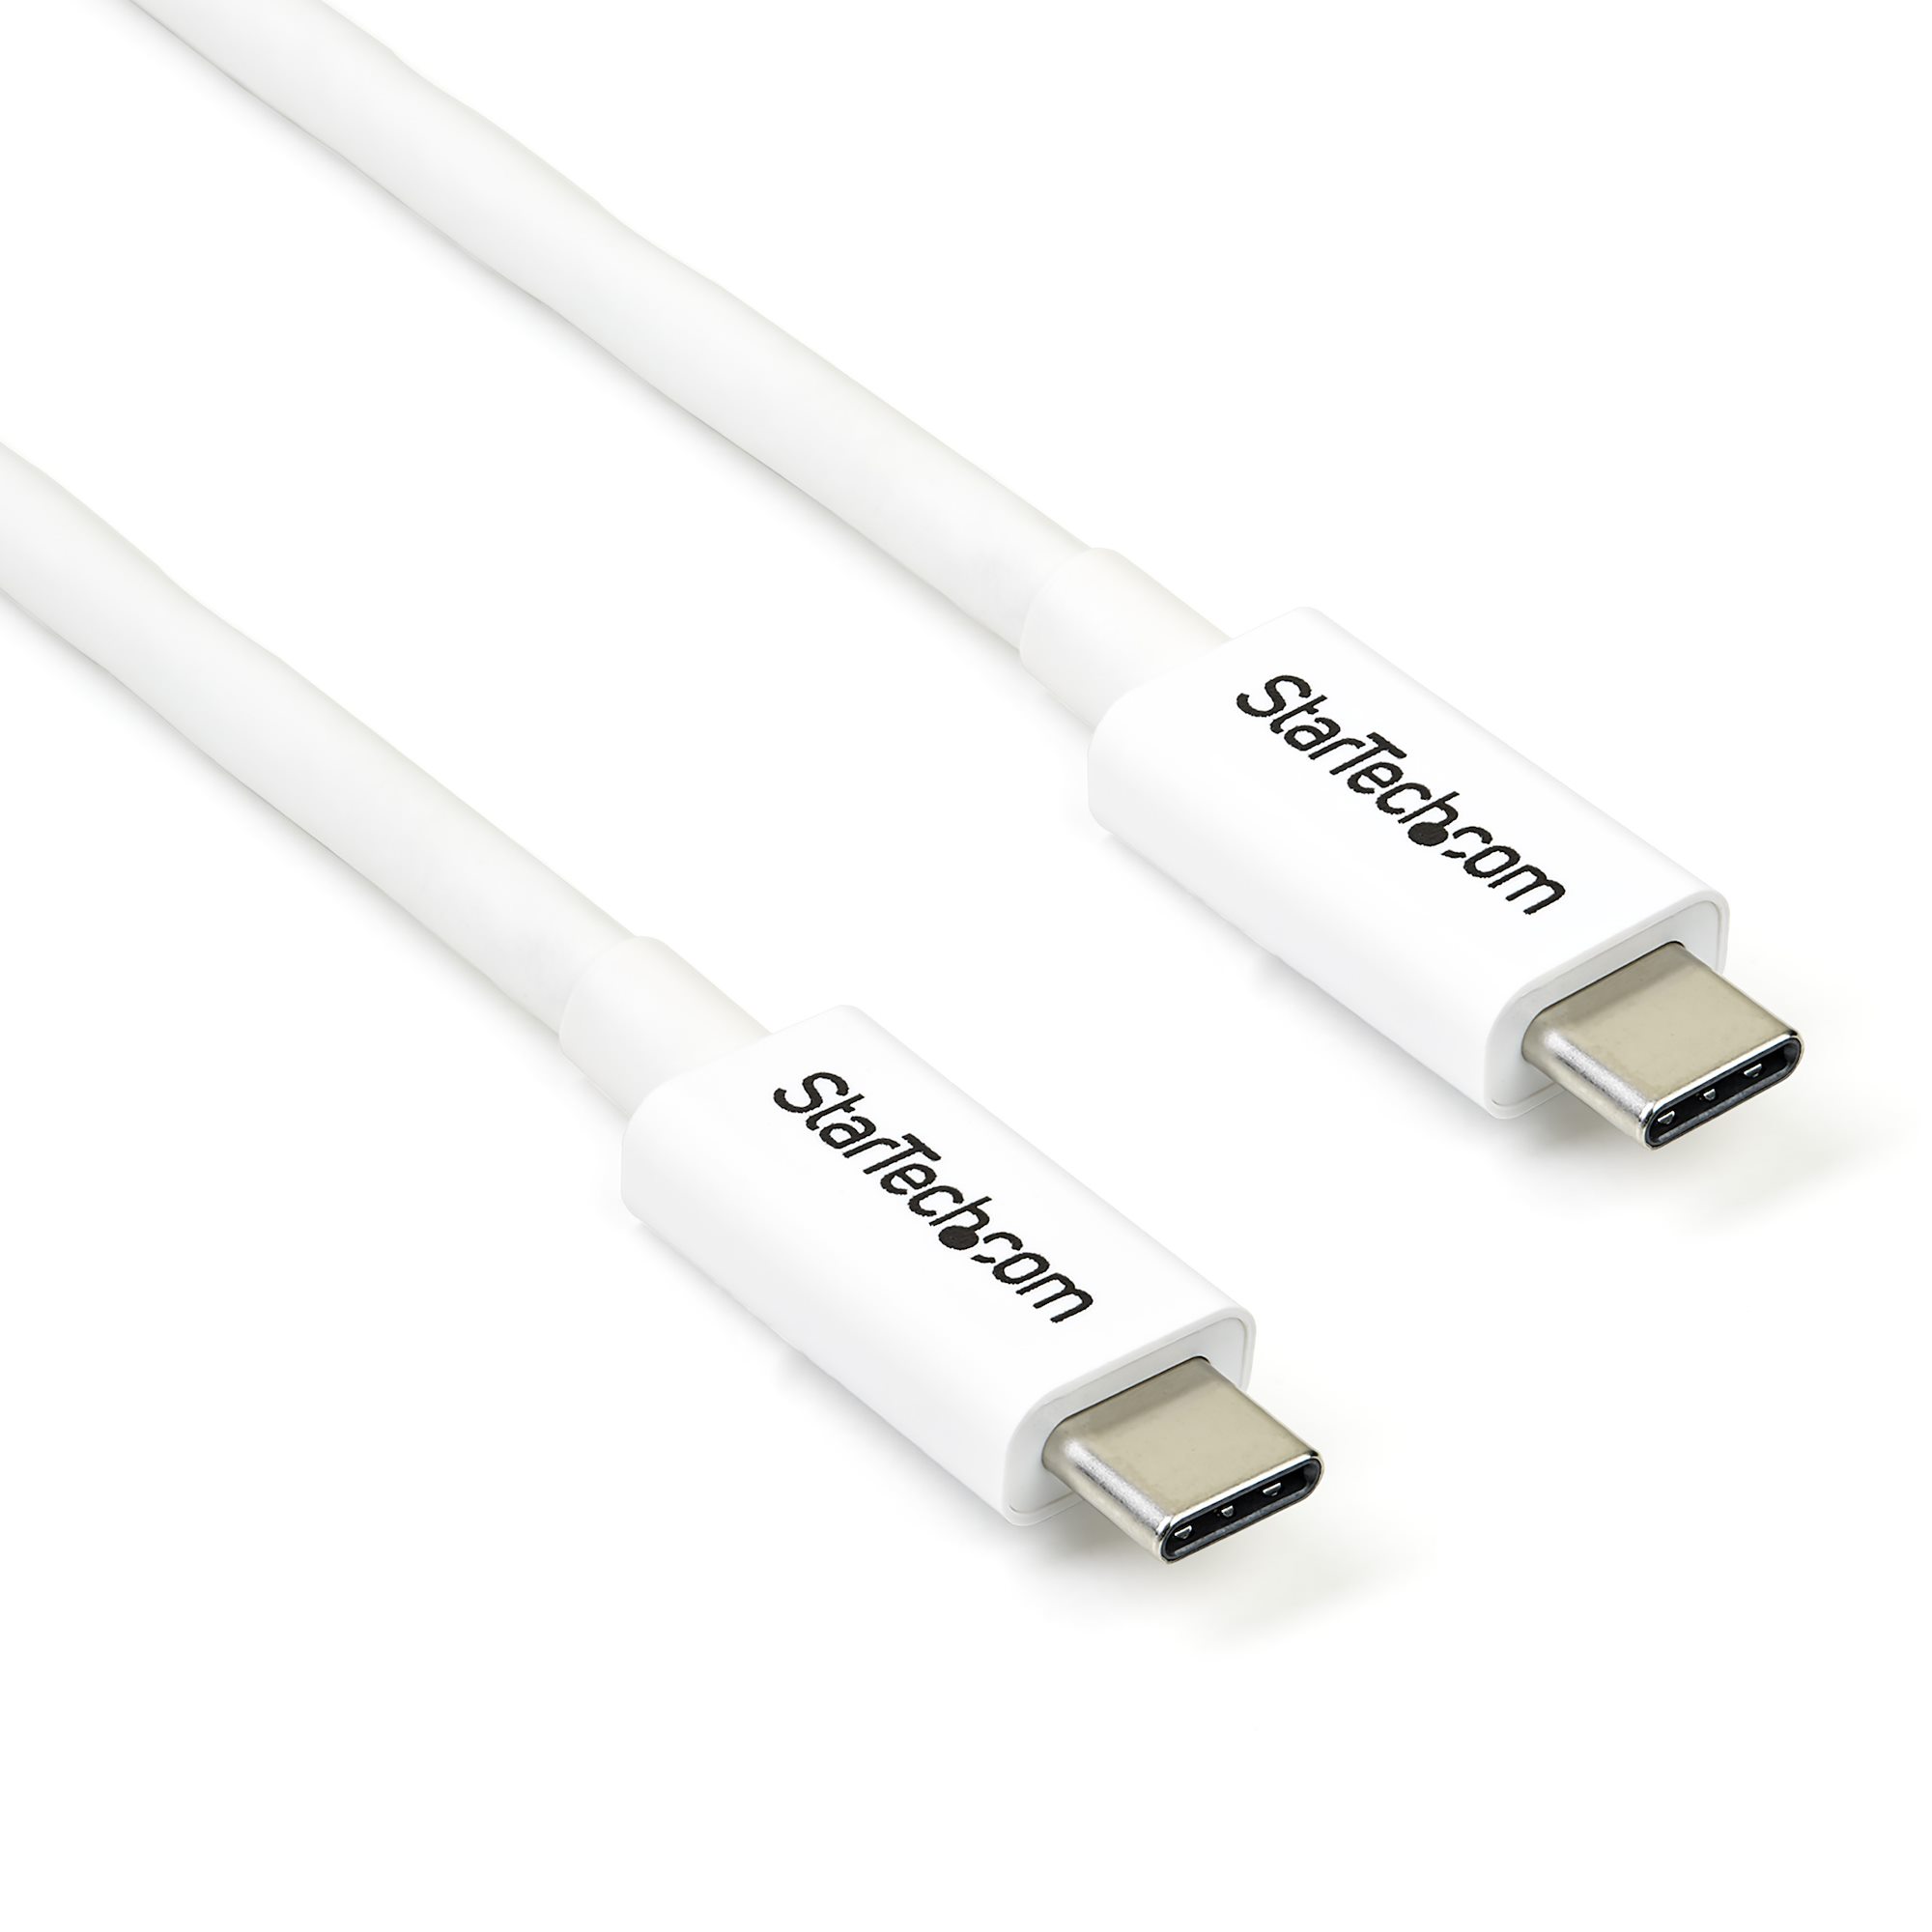 Pro c кабель. Кабель Thunderbolt 3 USB C. Кабель Apple Thunderbolt Cable 2m. Thunderbolt 3 Apple кабель. Тандерболт 3 разъем.